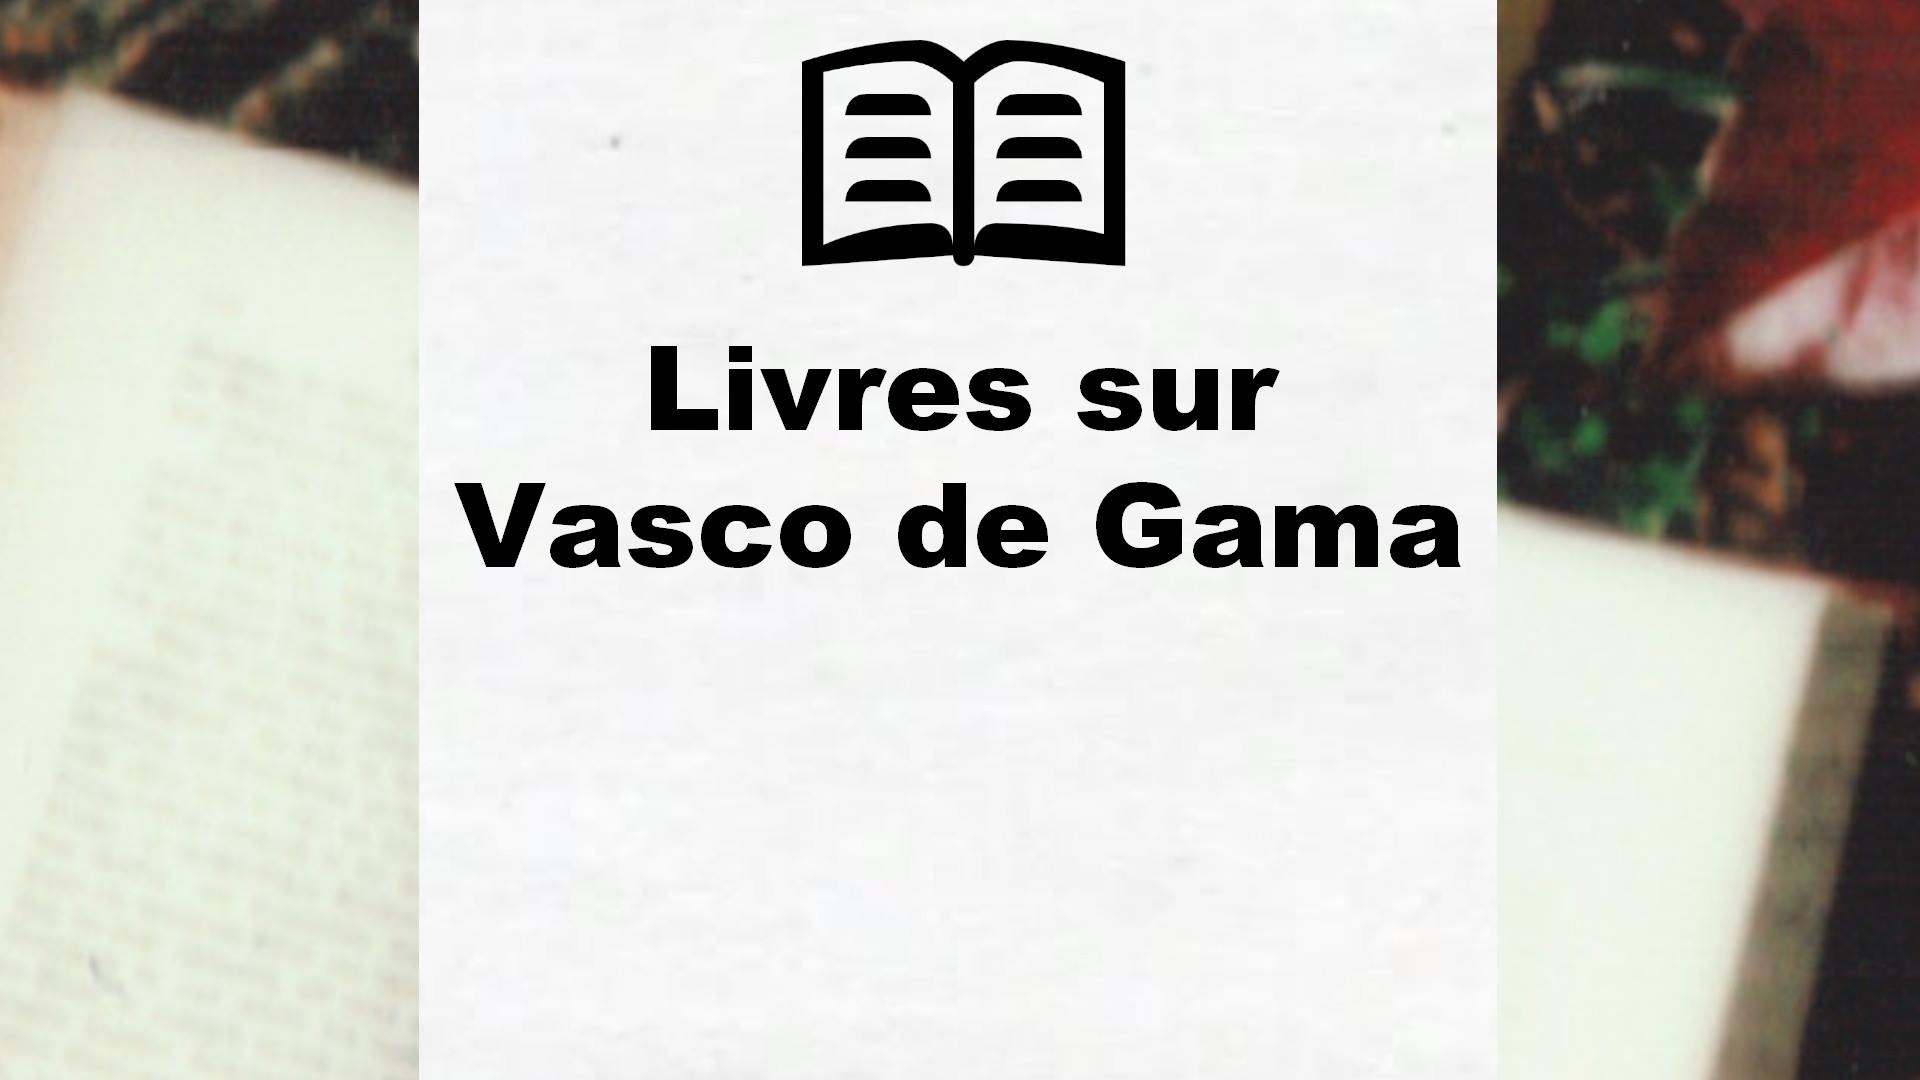 Livres sur Vasco de Gama